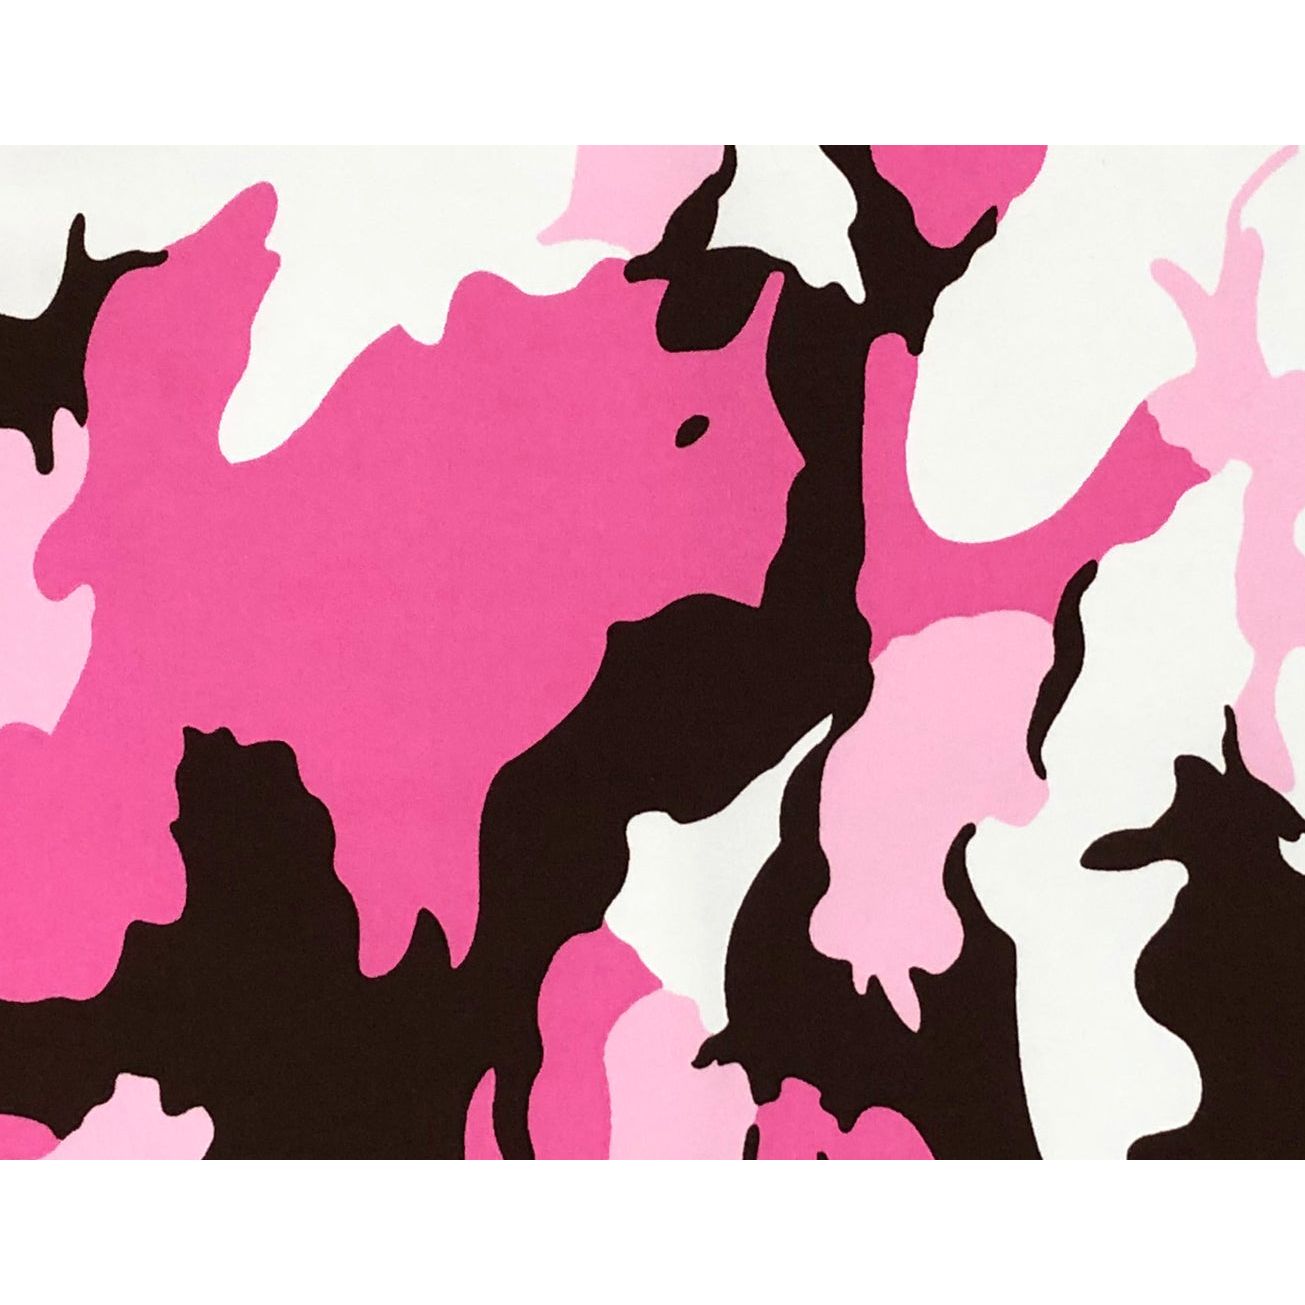 Elastic Waist Board Shorts "Stealth Fanatic" (Brown + Pink) Print Men's CUSTOM